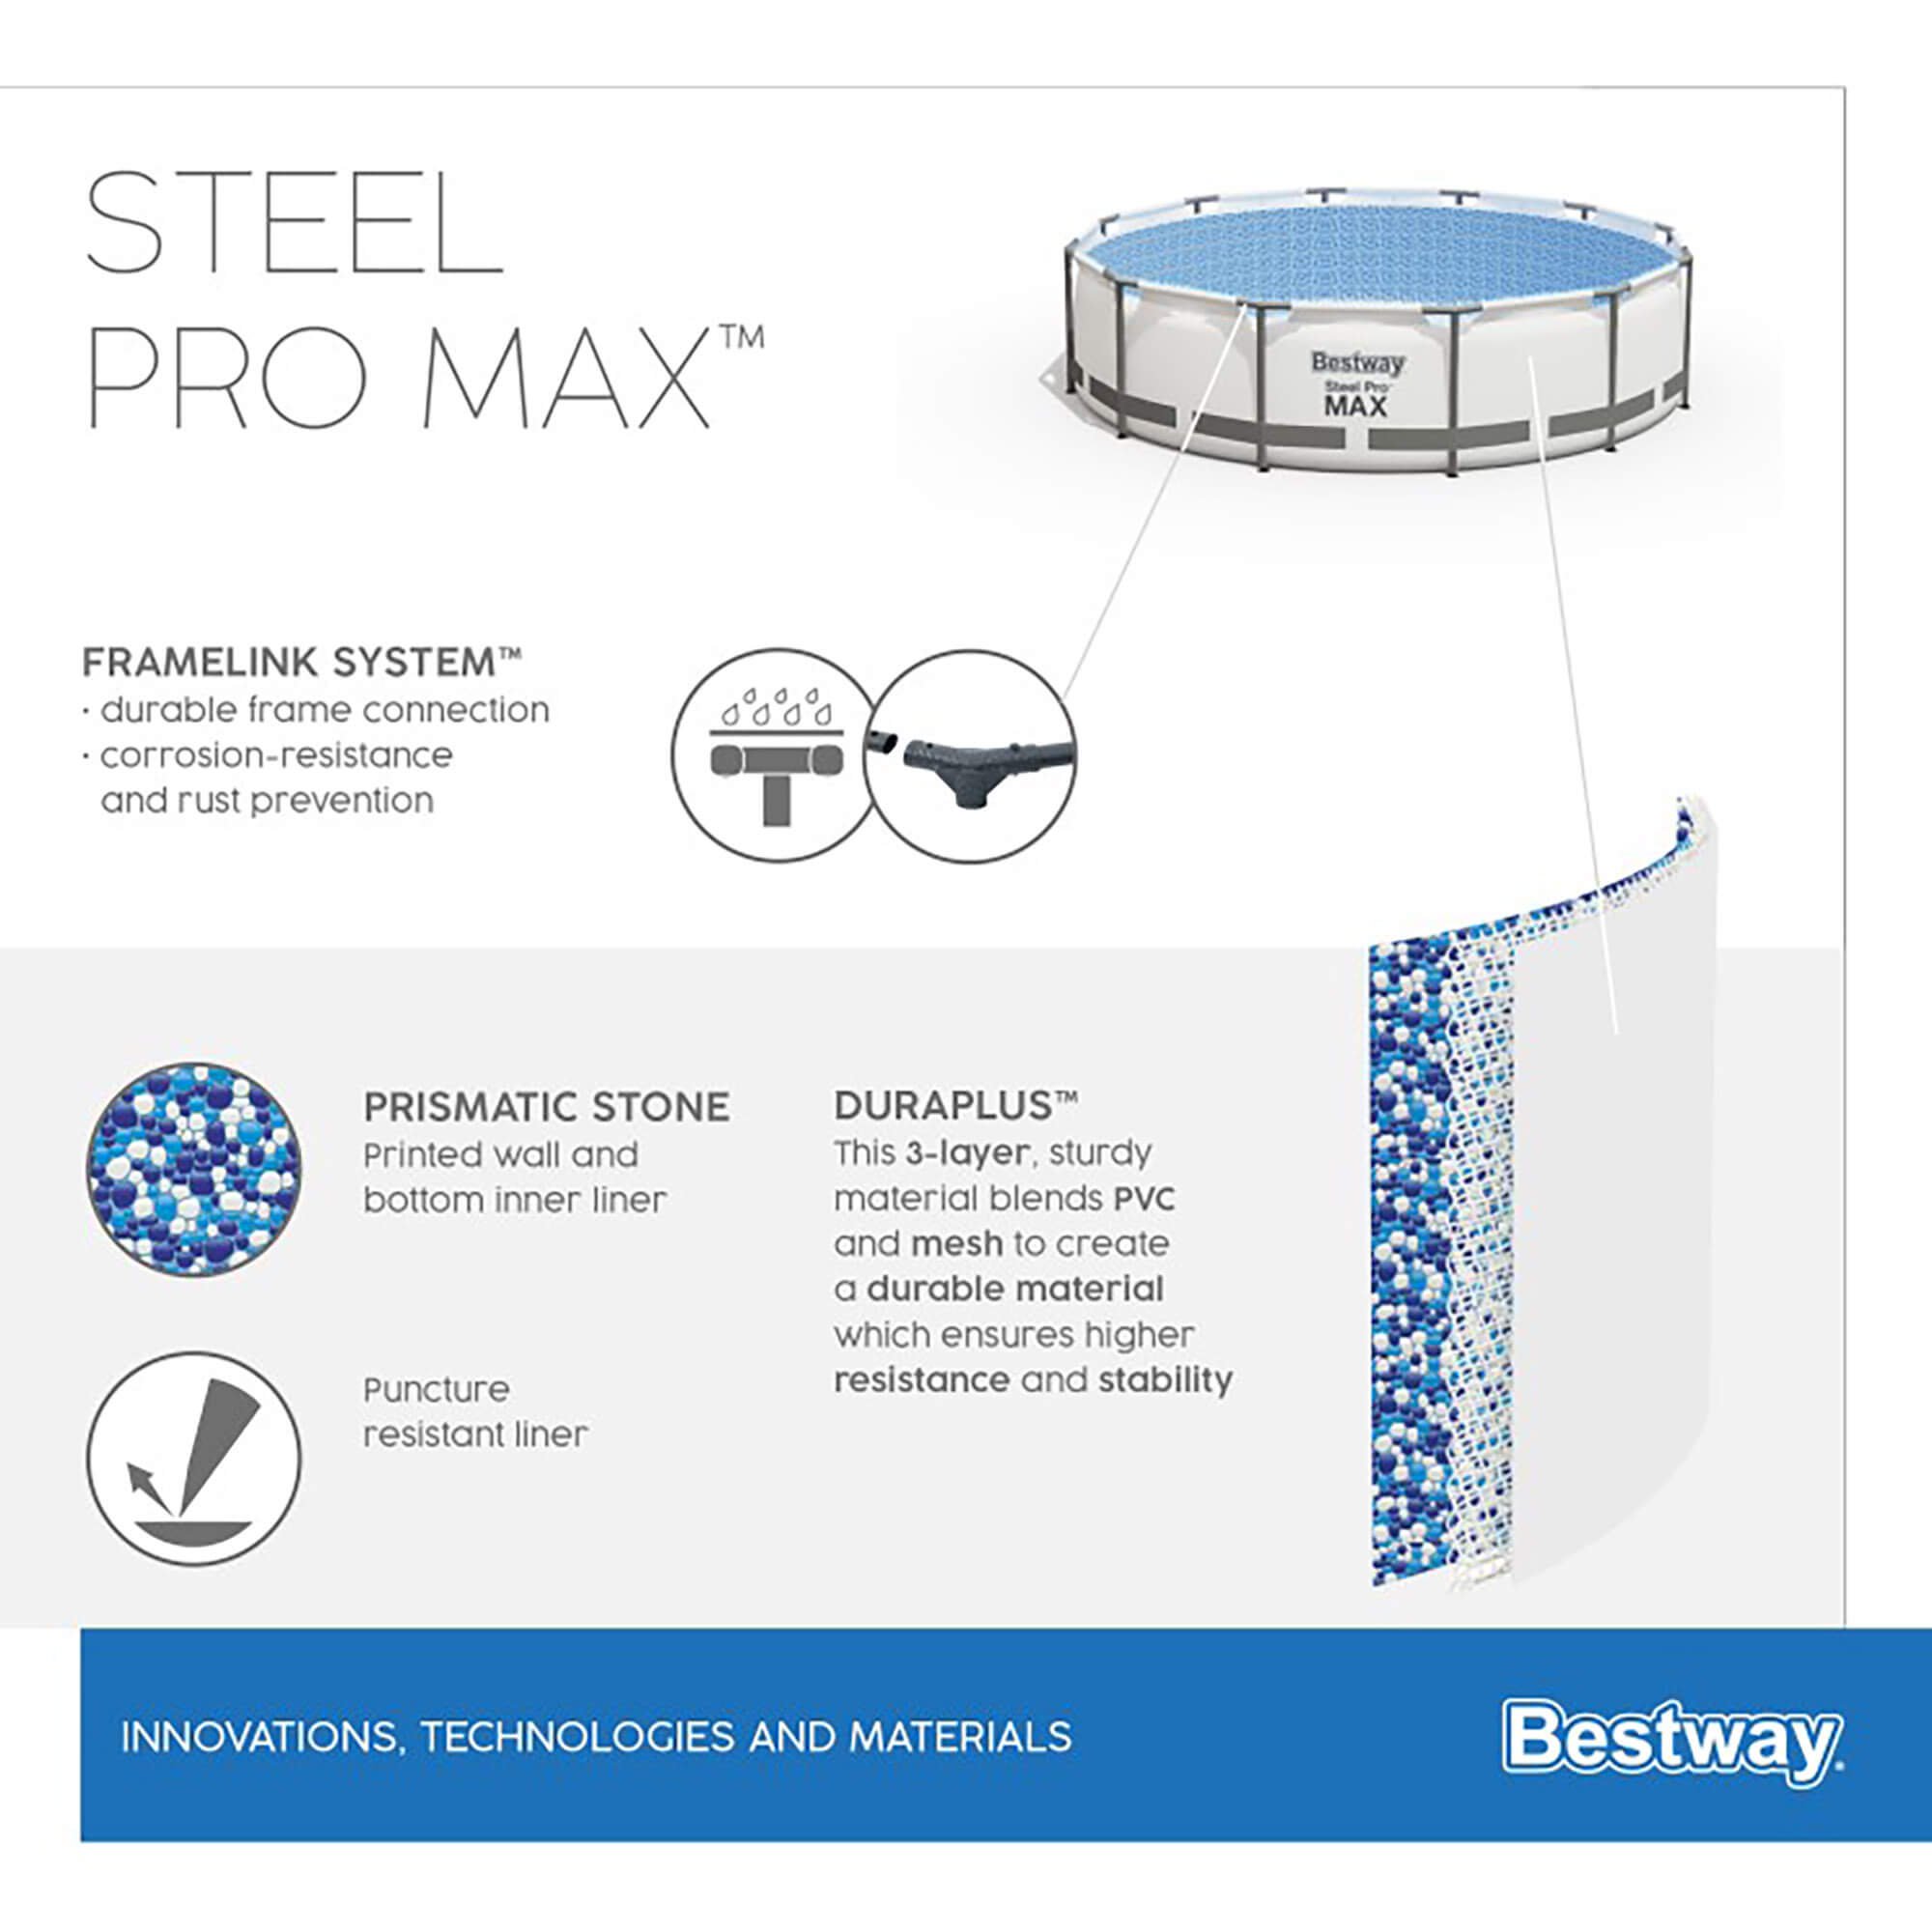 Bestway Steel Pro MAX Frame Pool Komplettset 366 x 122 cm (56420GS)